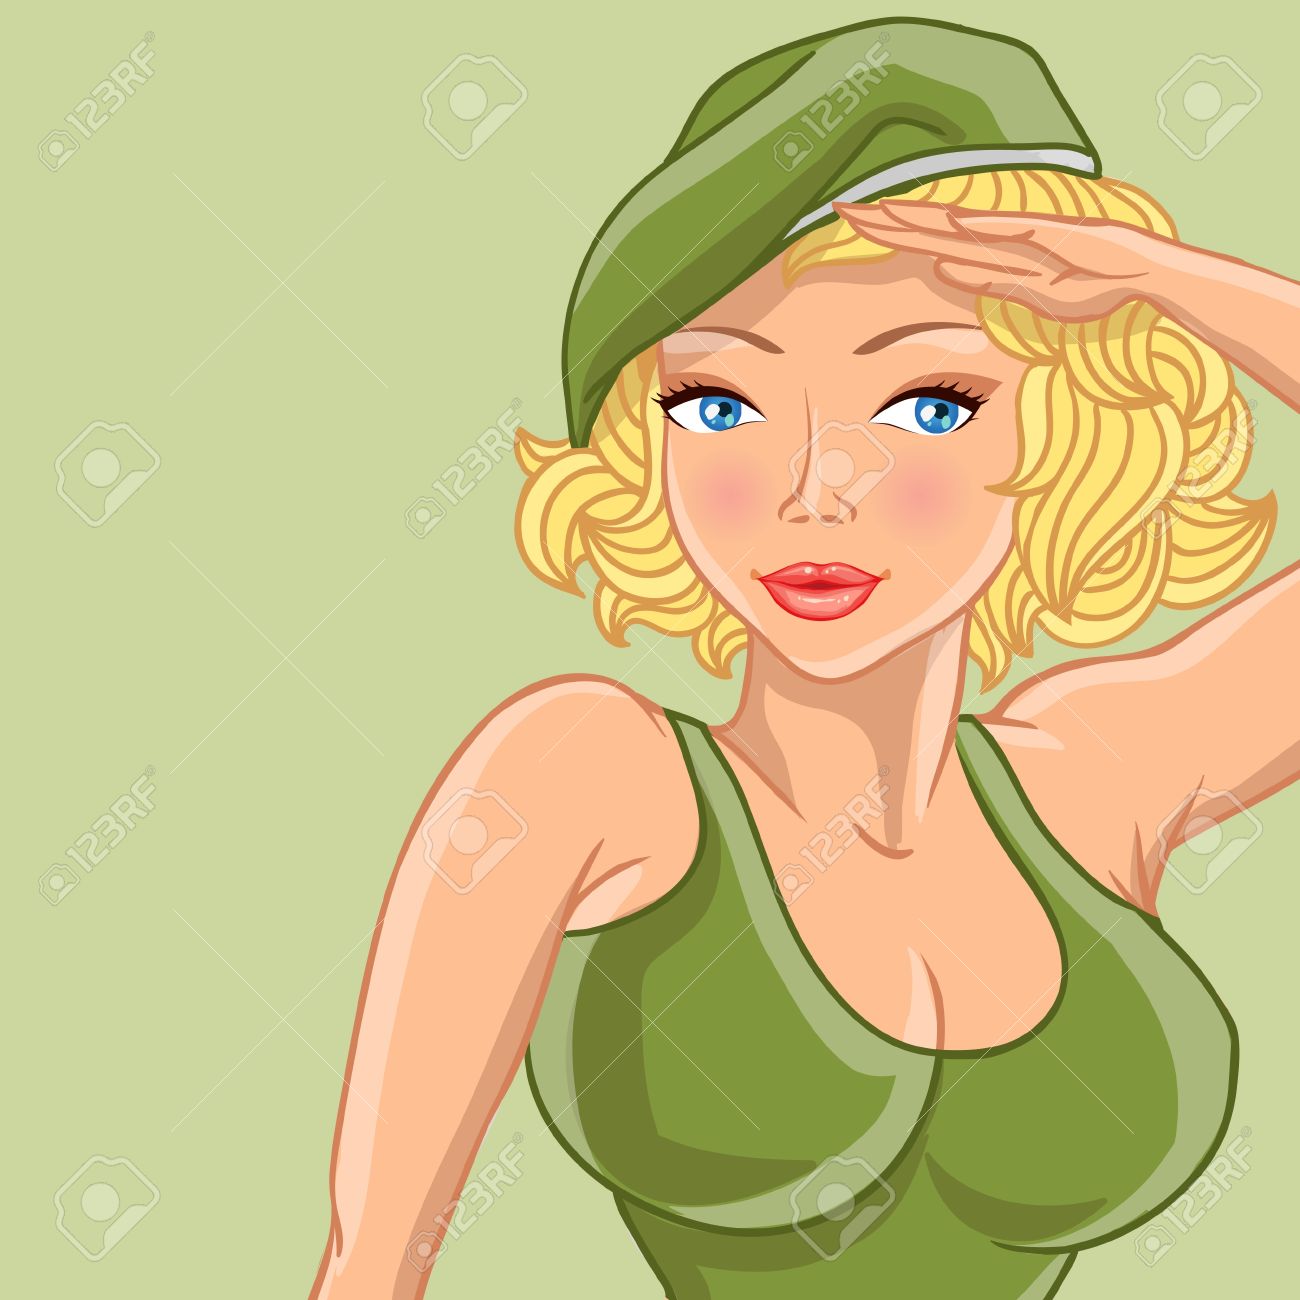 female military clip art free - photo #46